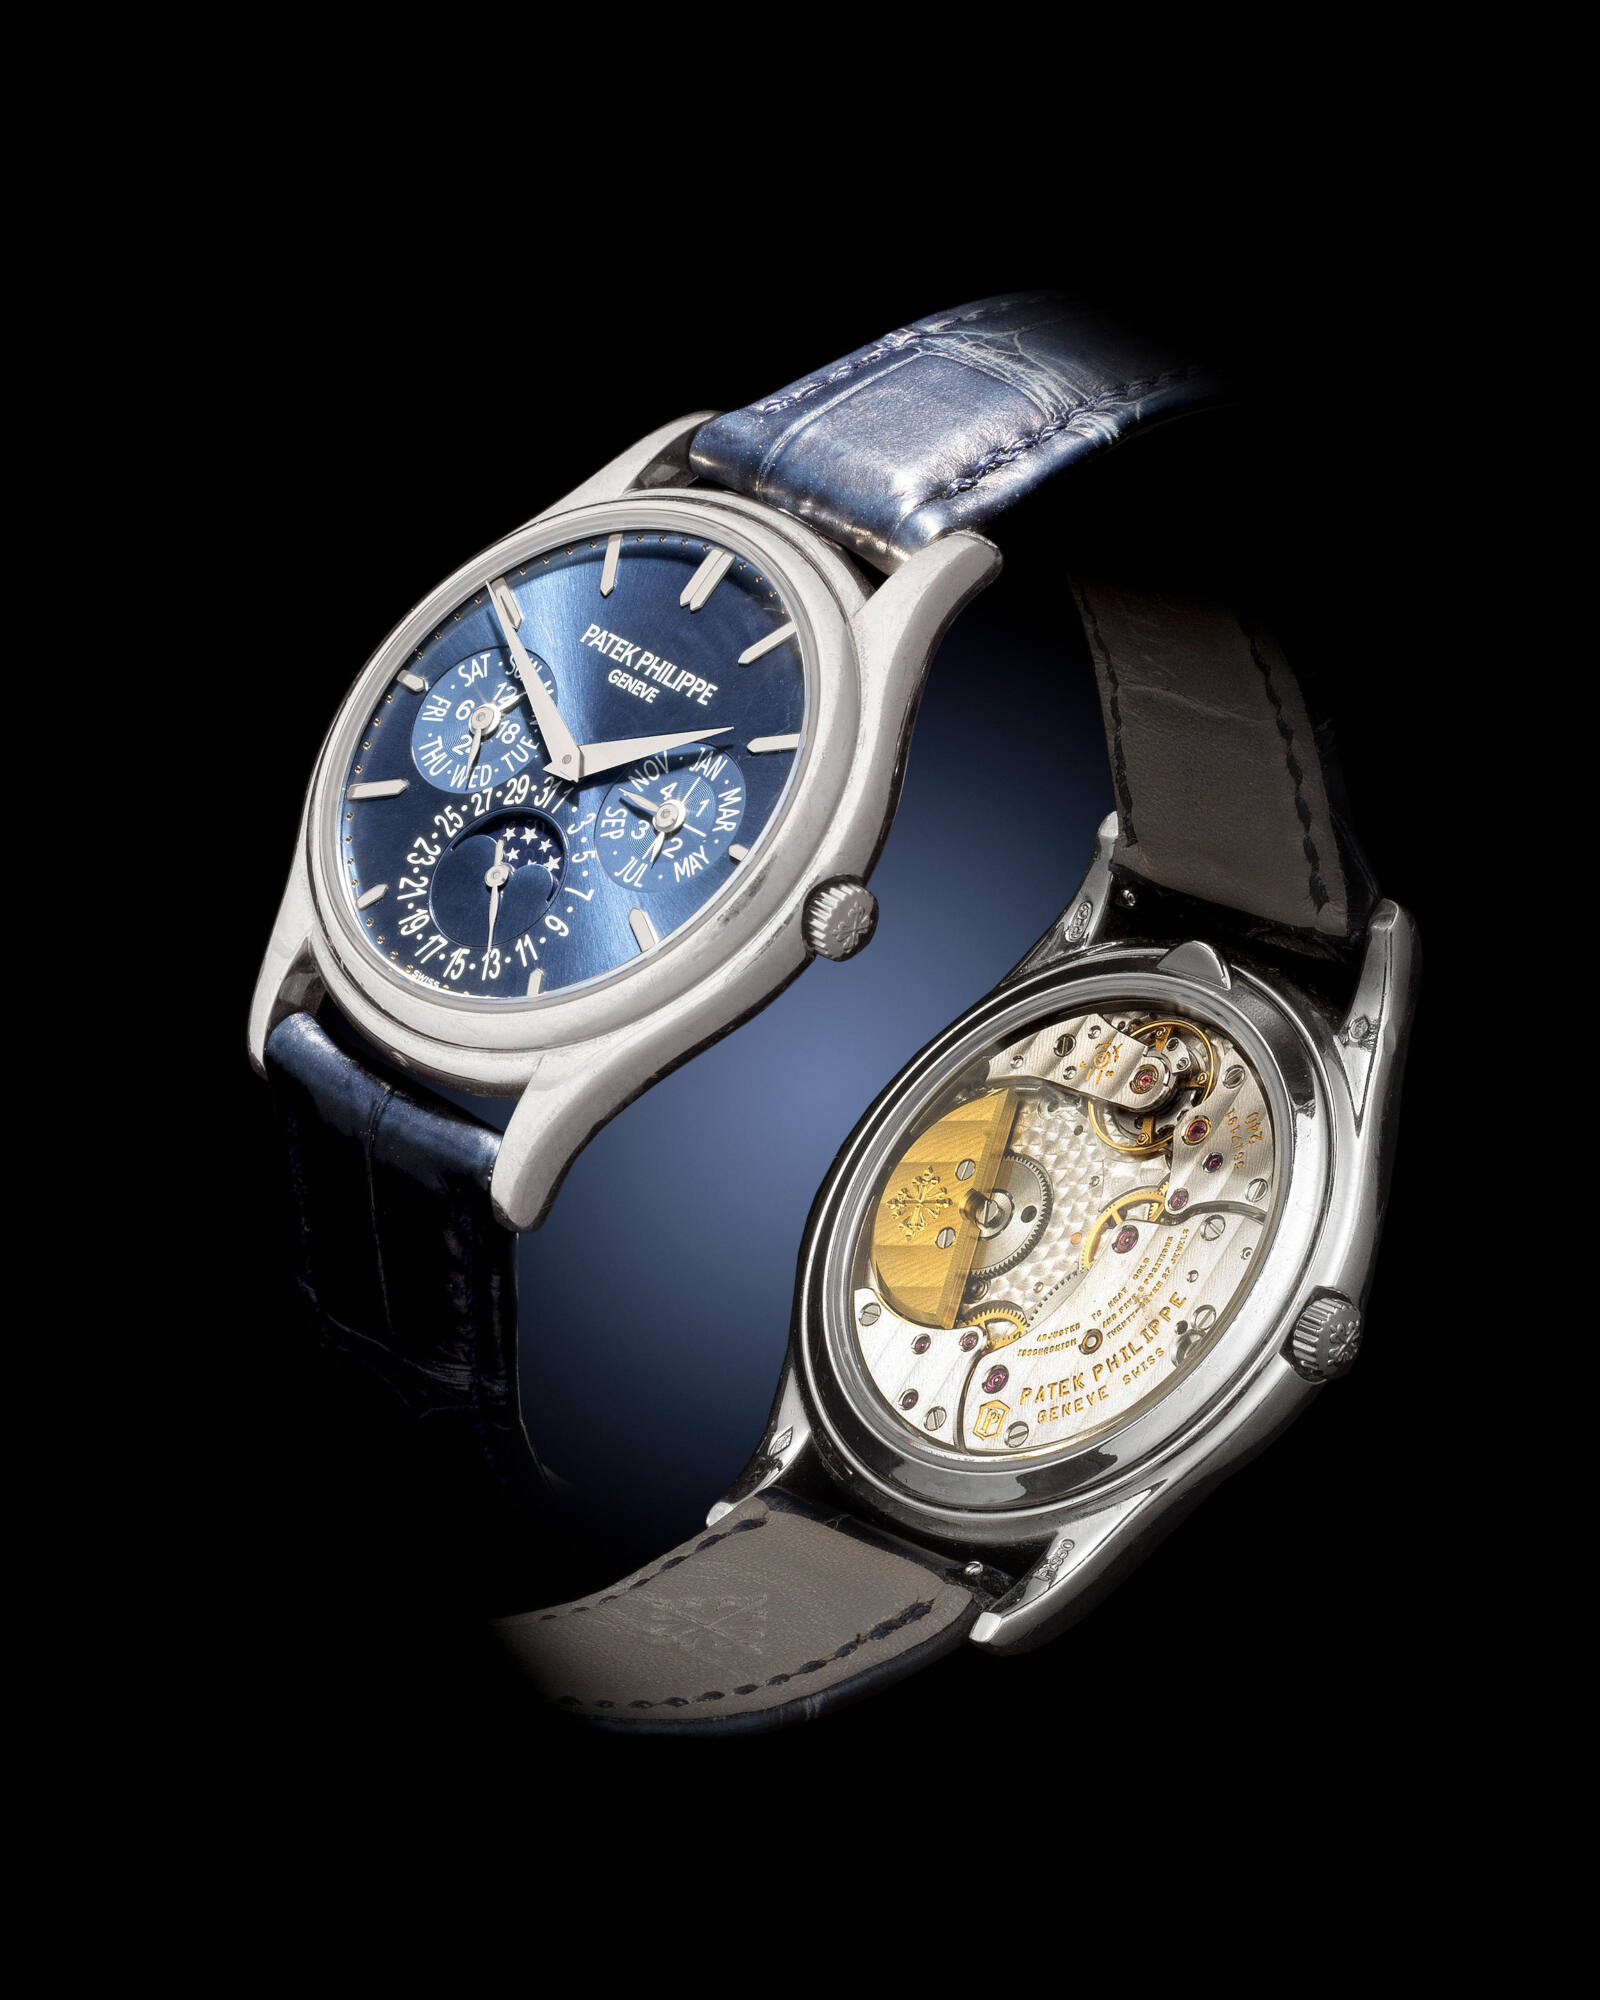 Watches and Wristwatches Auction by Bonhams - MondaniWeb